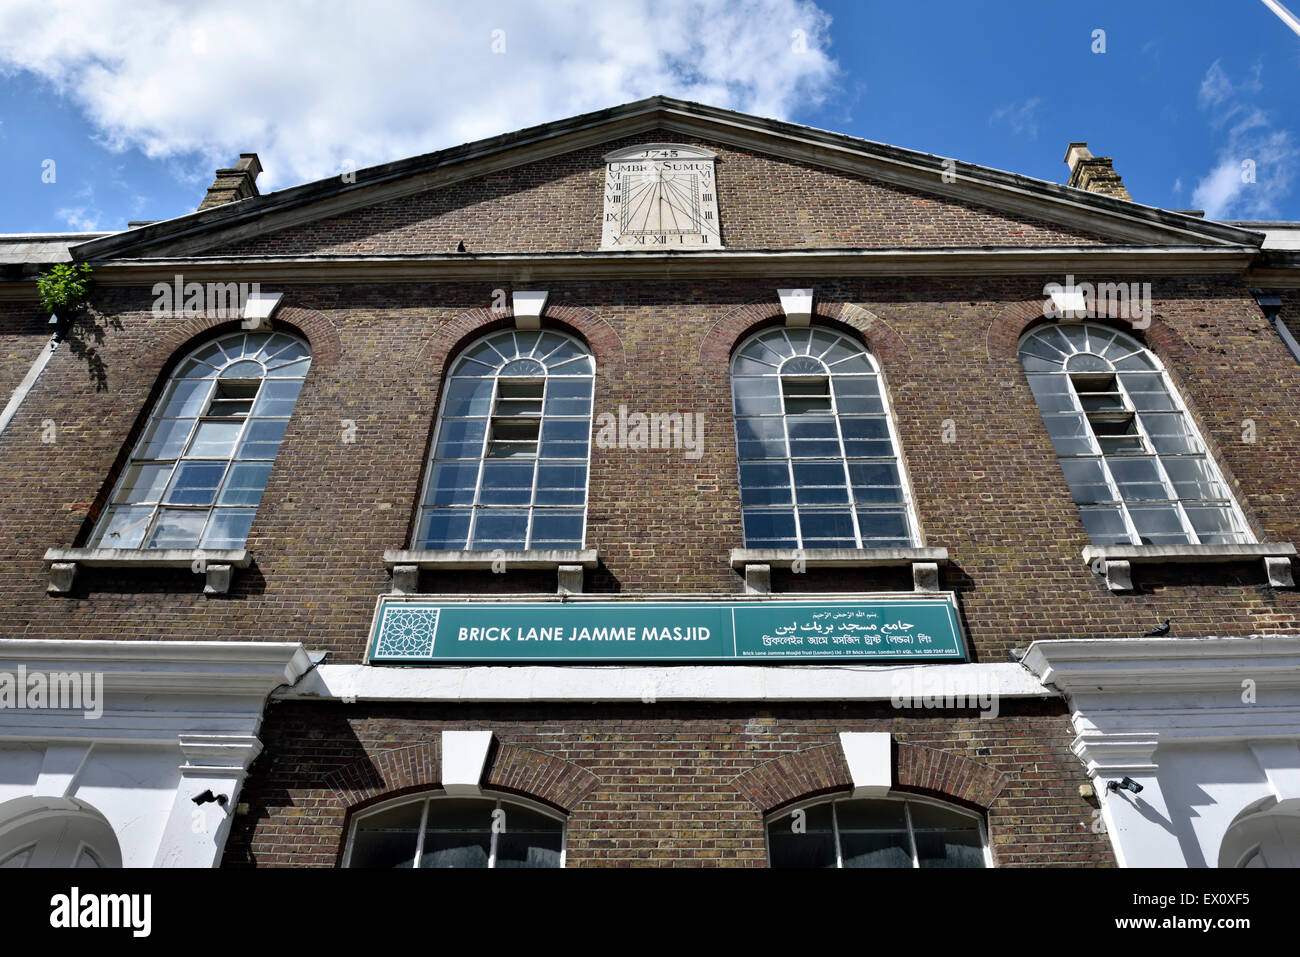 Brick Lane Jamme Masjid Mosque, London Borough of Tower Hamlets, England Britain UK Stock Photo